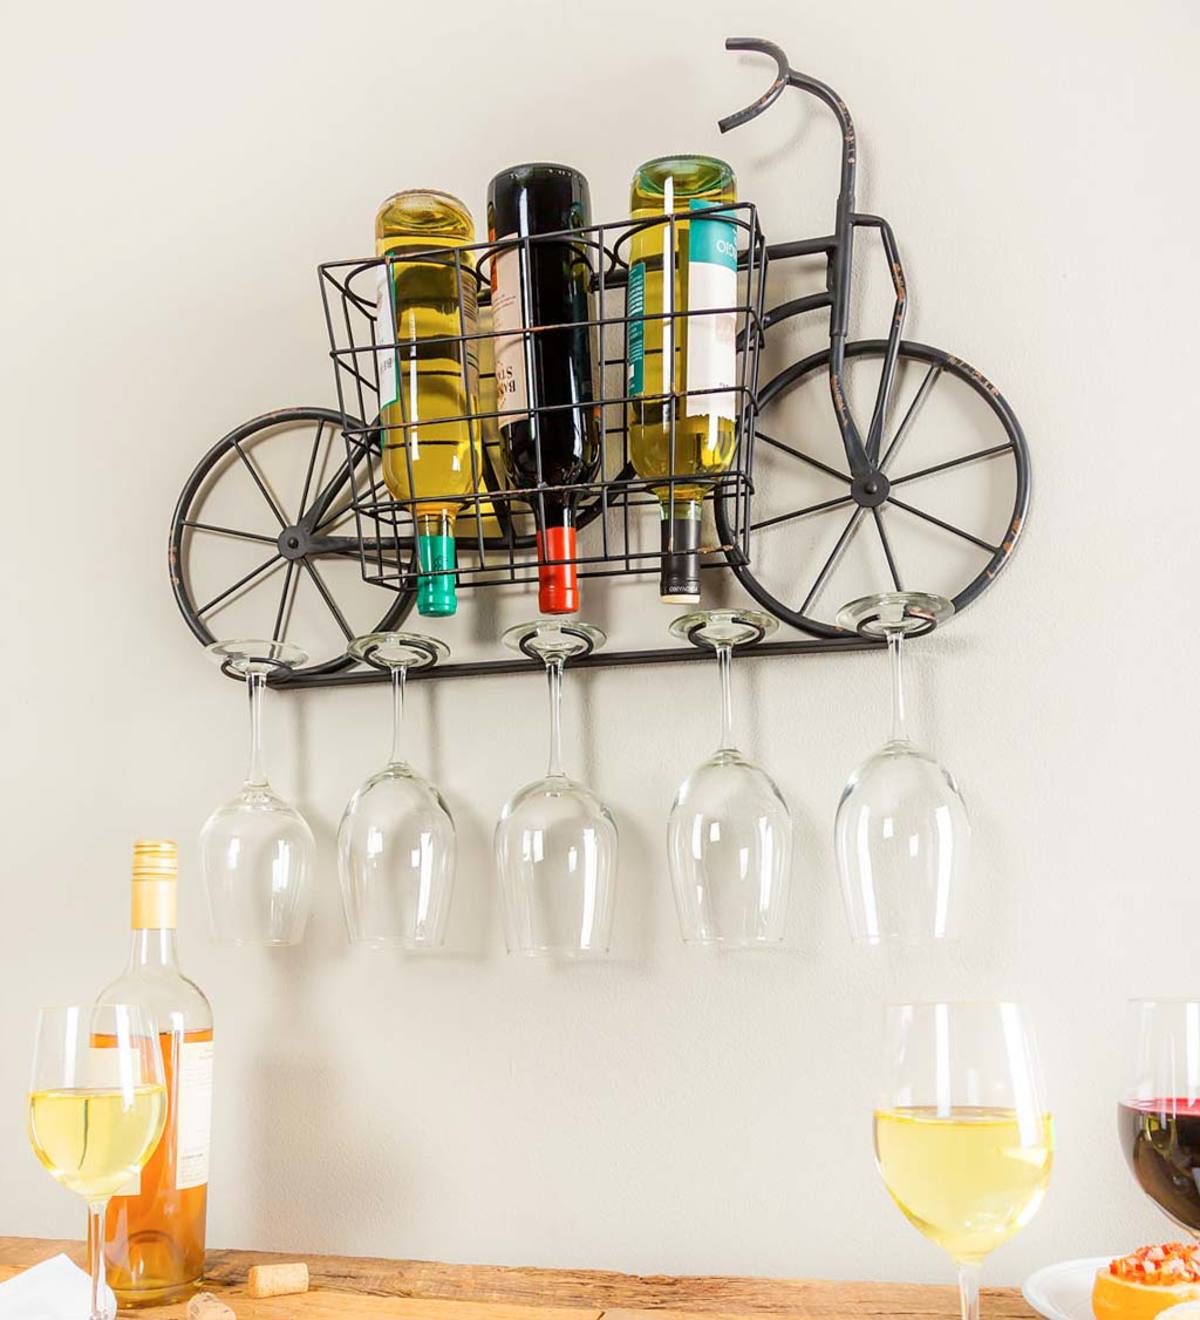 Black Metal Bicycle Wine and Glass Rack